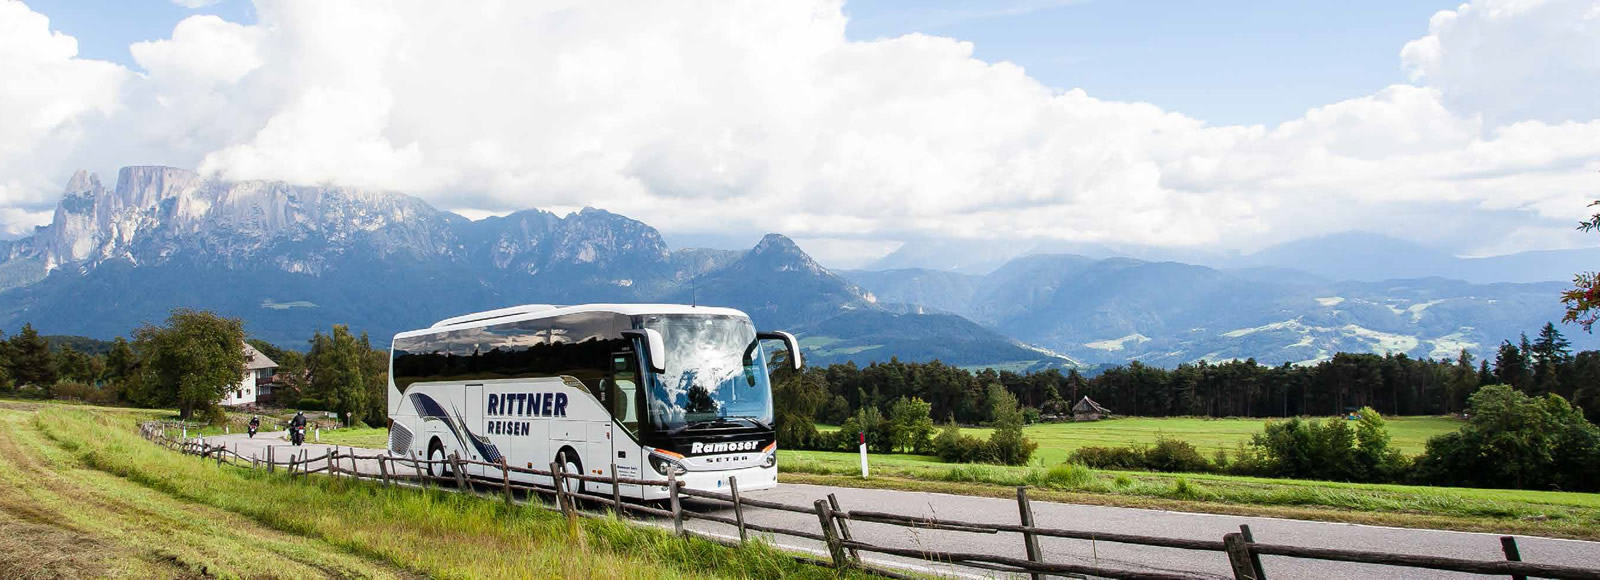 Viaggi in autobus e pullman tour in Alto Adige, Bolzano - Rittner Reisen